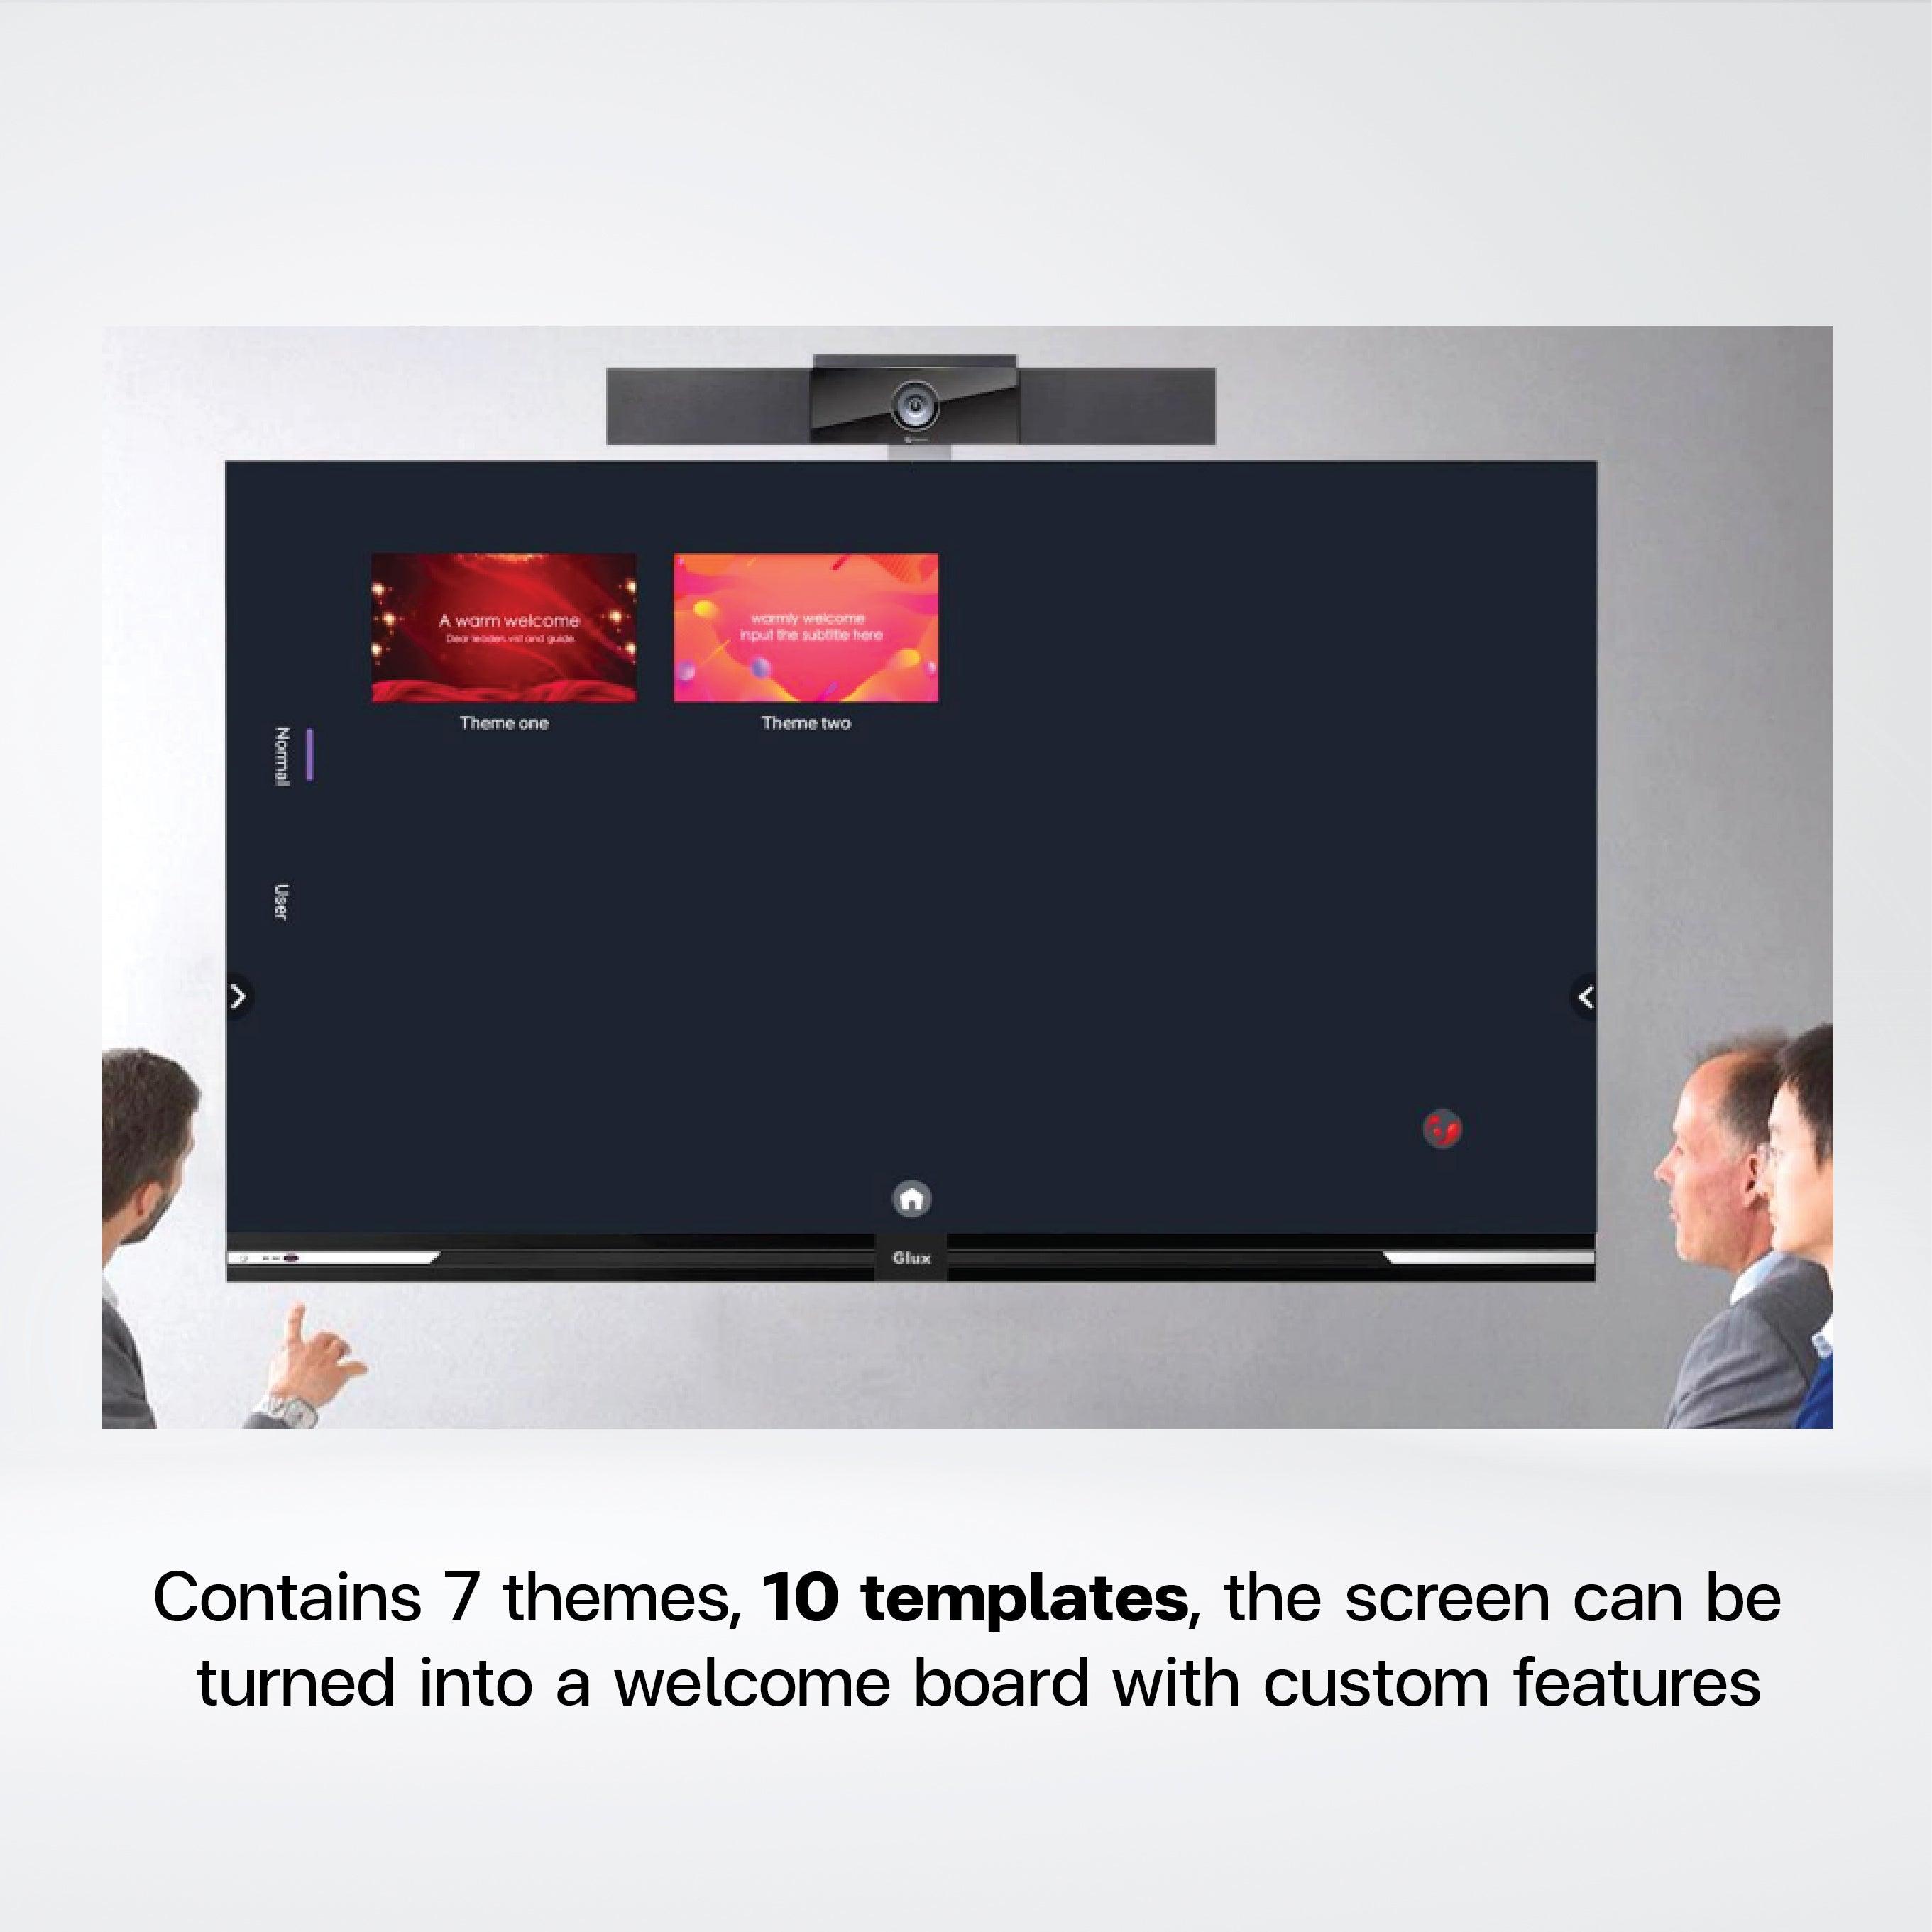 LED-iAT Ⅱ 165-FHD Intelligent Interactive LED Meeting room Board - Riverplus